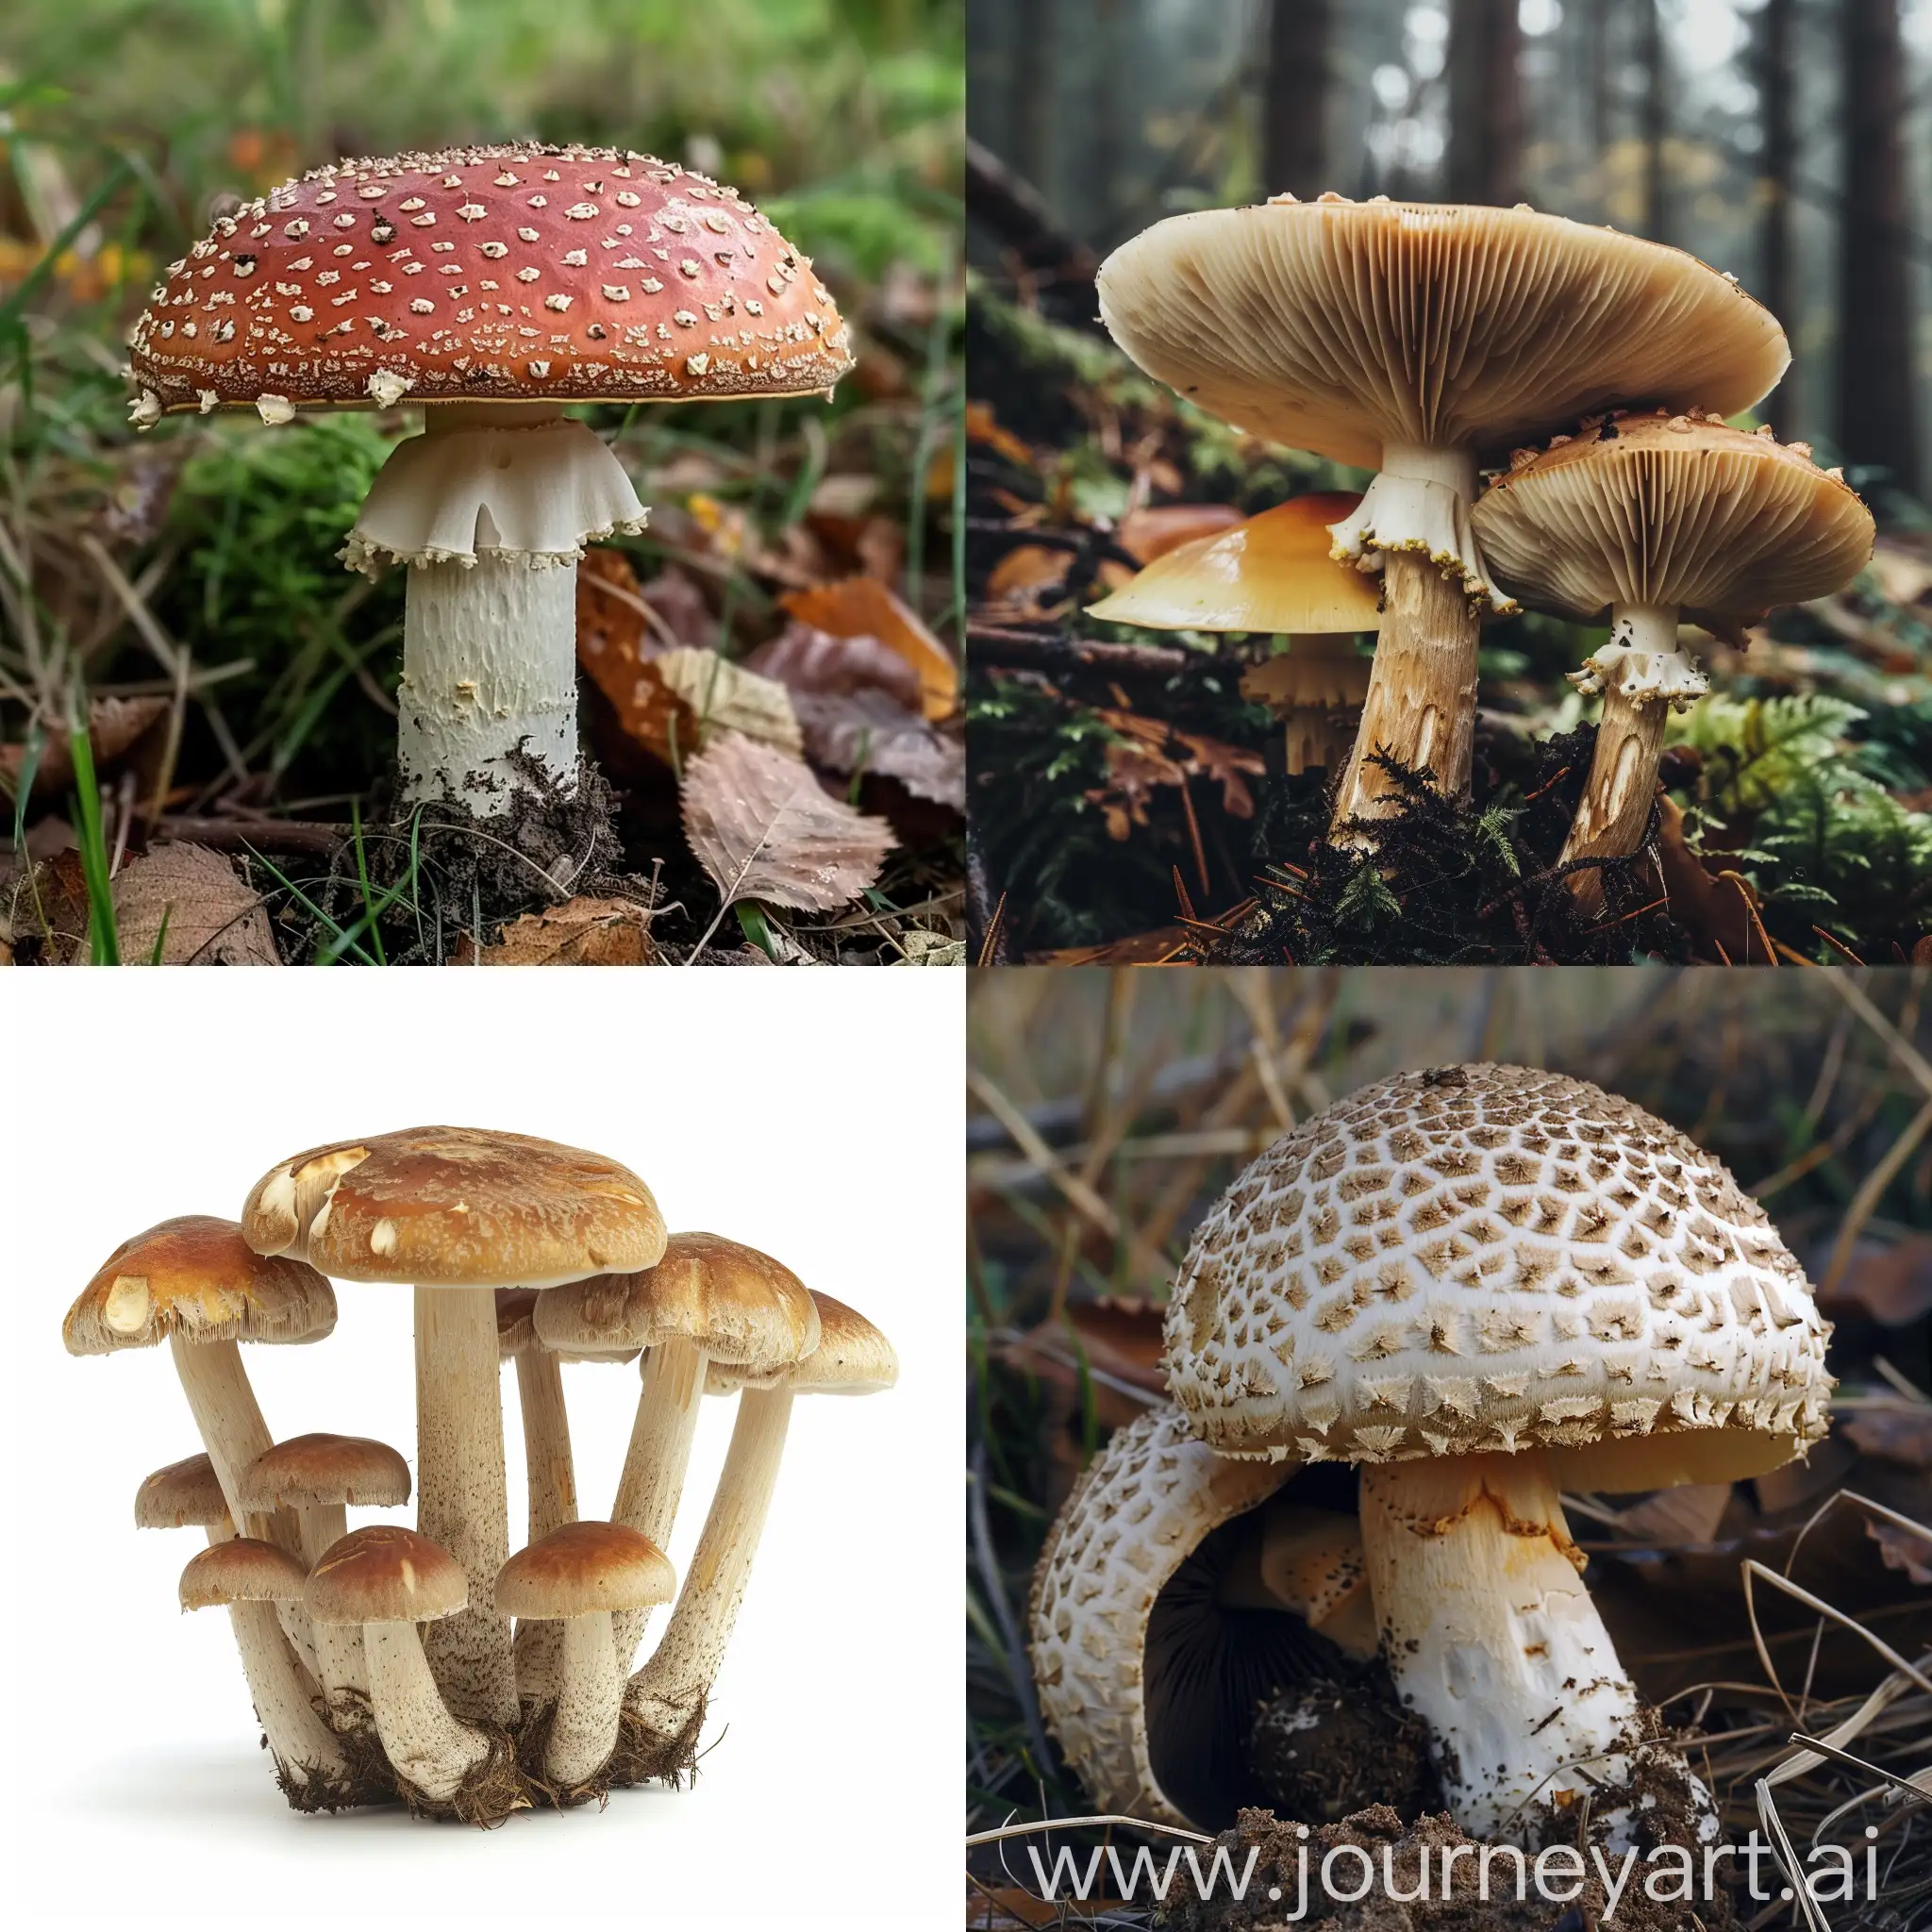 Vibrant-Mushroom-Illustration-with-Intricate-Details